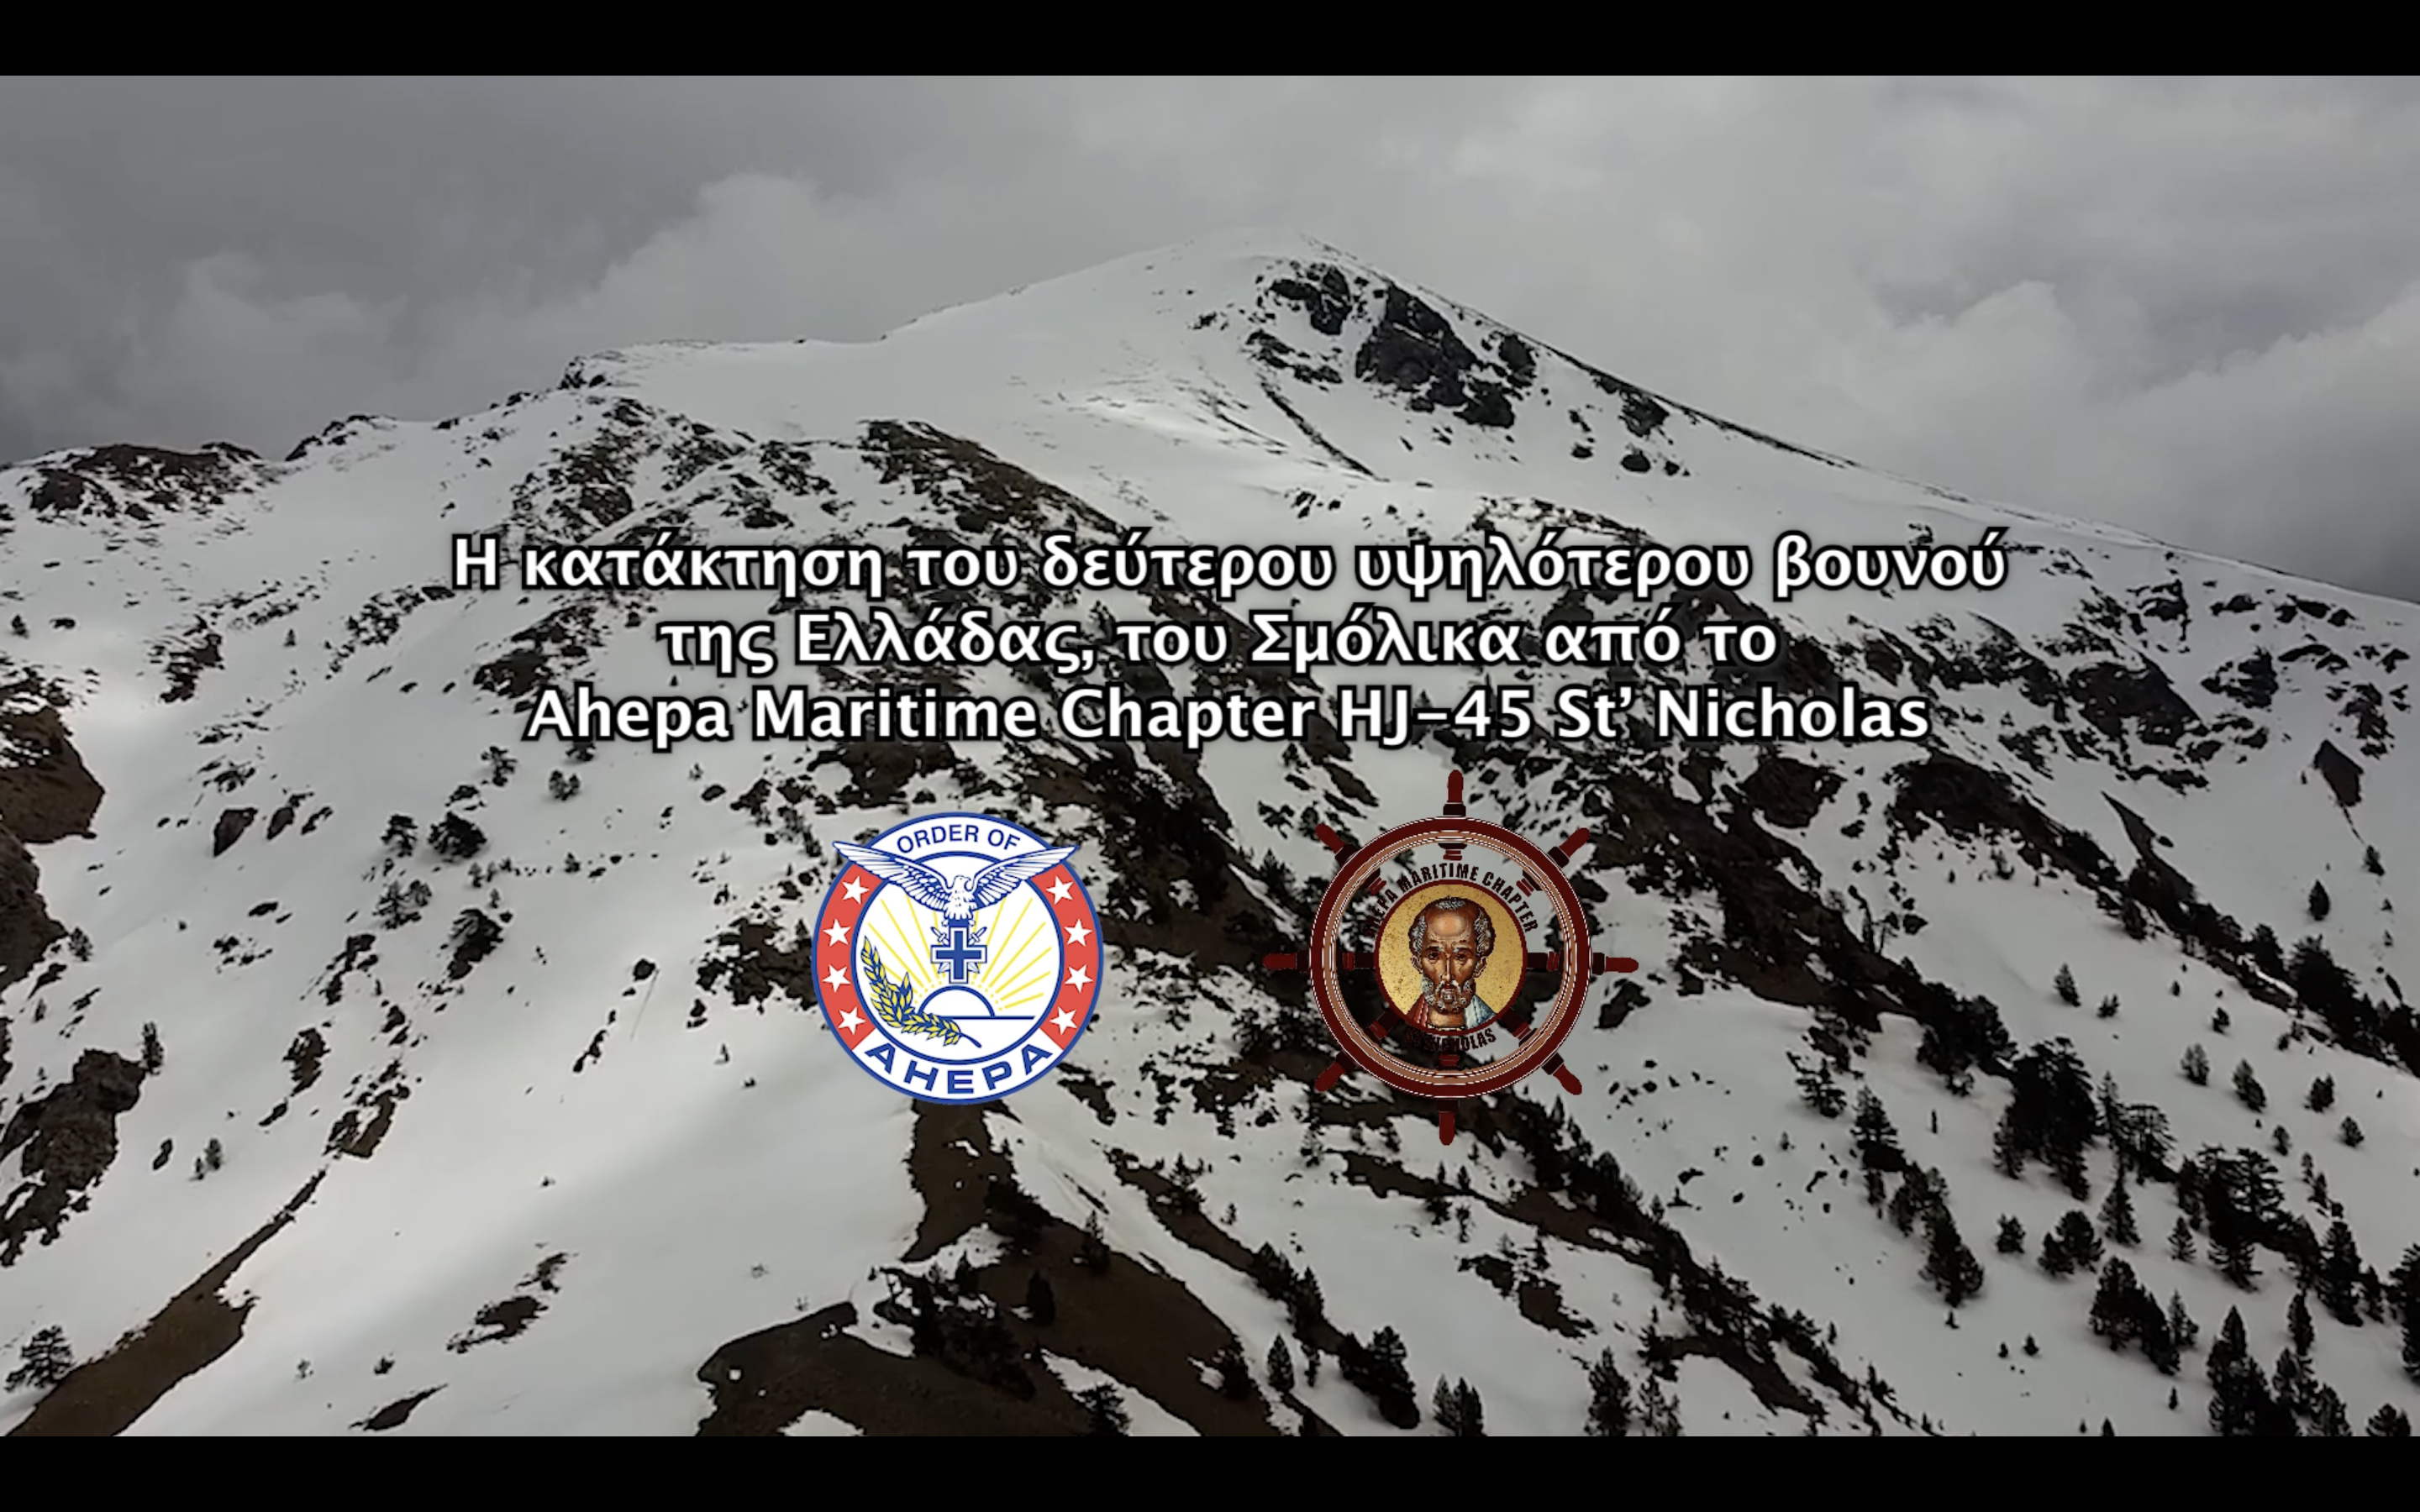 You are currently viewing Η Επιτυχημένη Ανάβαση της Ορειβατικής Ομάδας του Ahepa Maritime Chapter HJ-45 St’ Nicholas στο Δεύτερο Υψηλότερο Βουνό της Ελλάδας, τον Σμόλικα, στα 2.637 Μέτρα Υψόμετρο